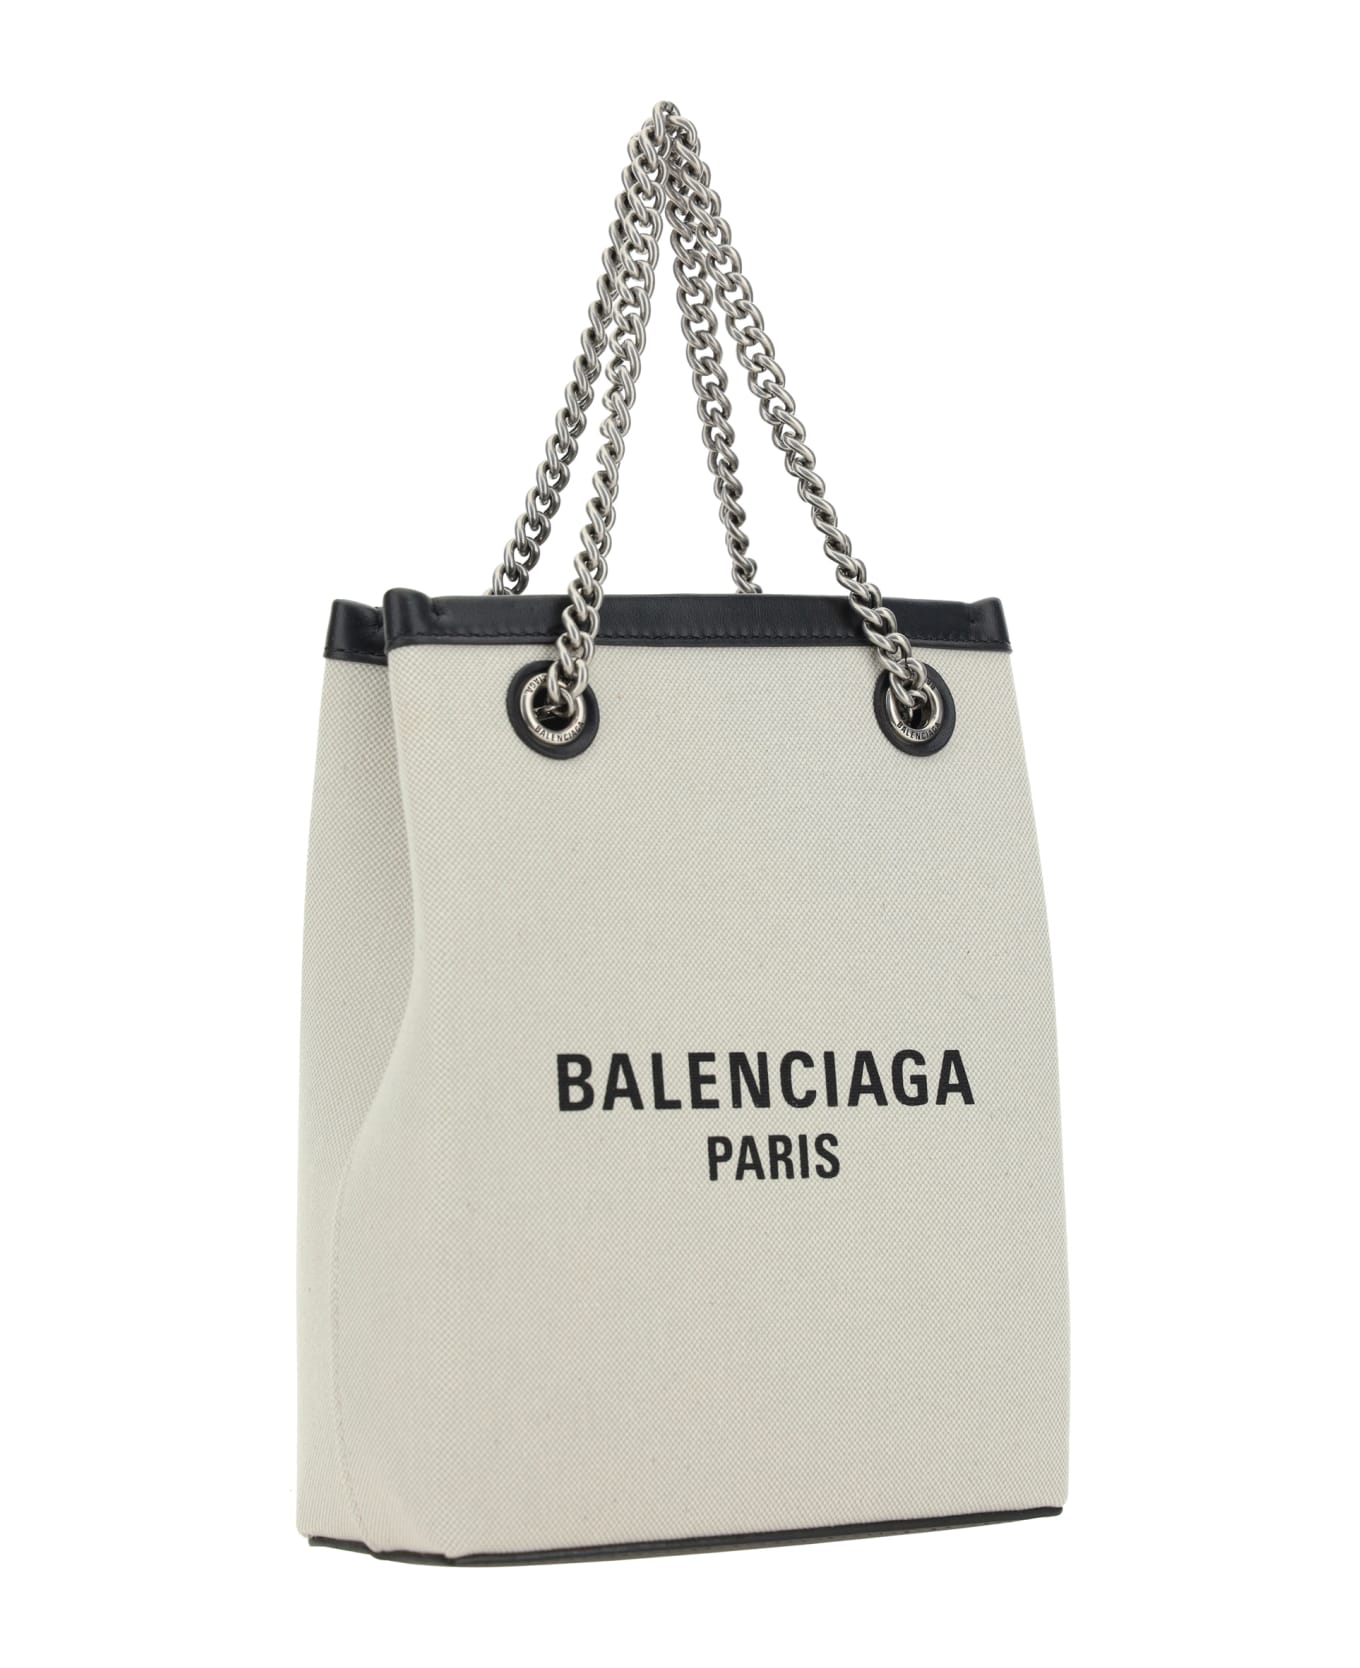 Balenciaga Duty Free Handbag - Naturel